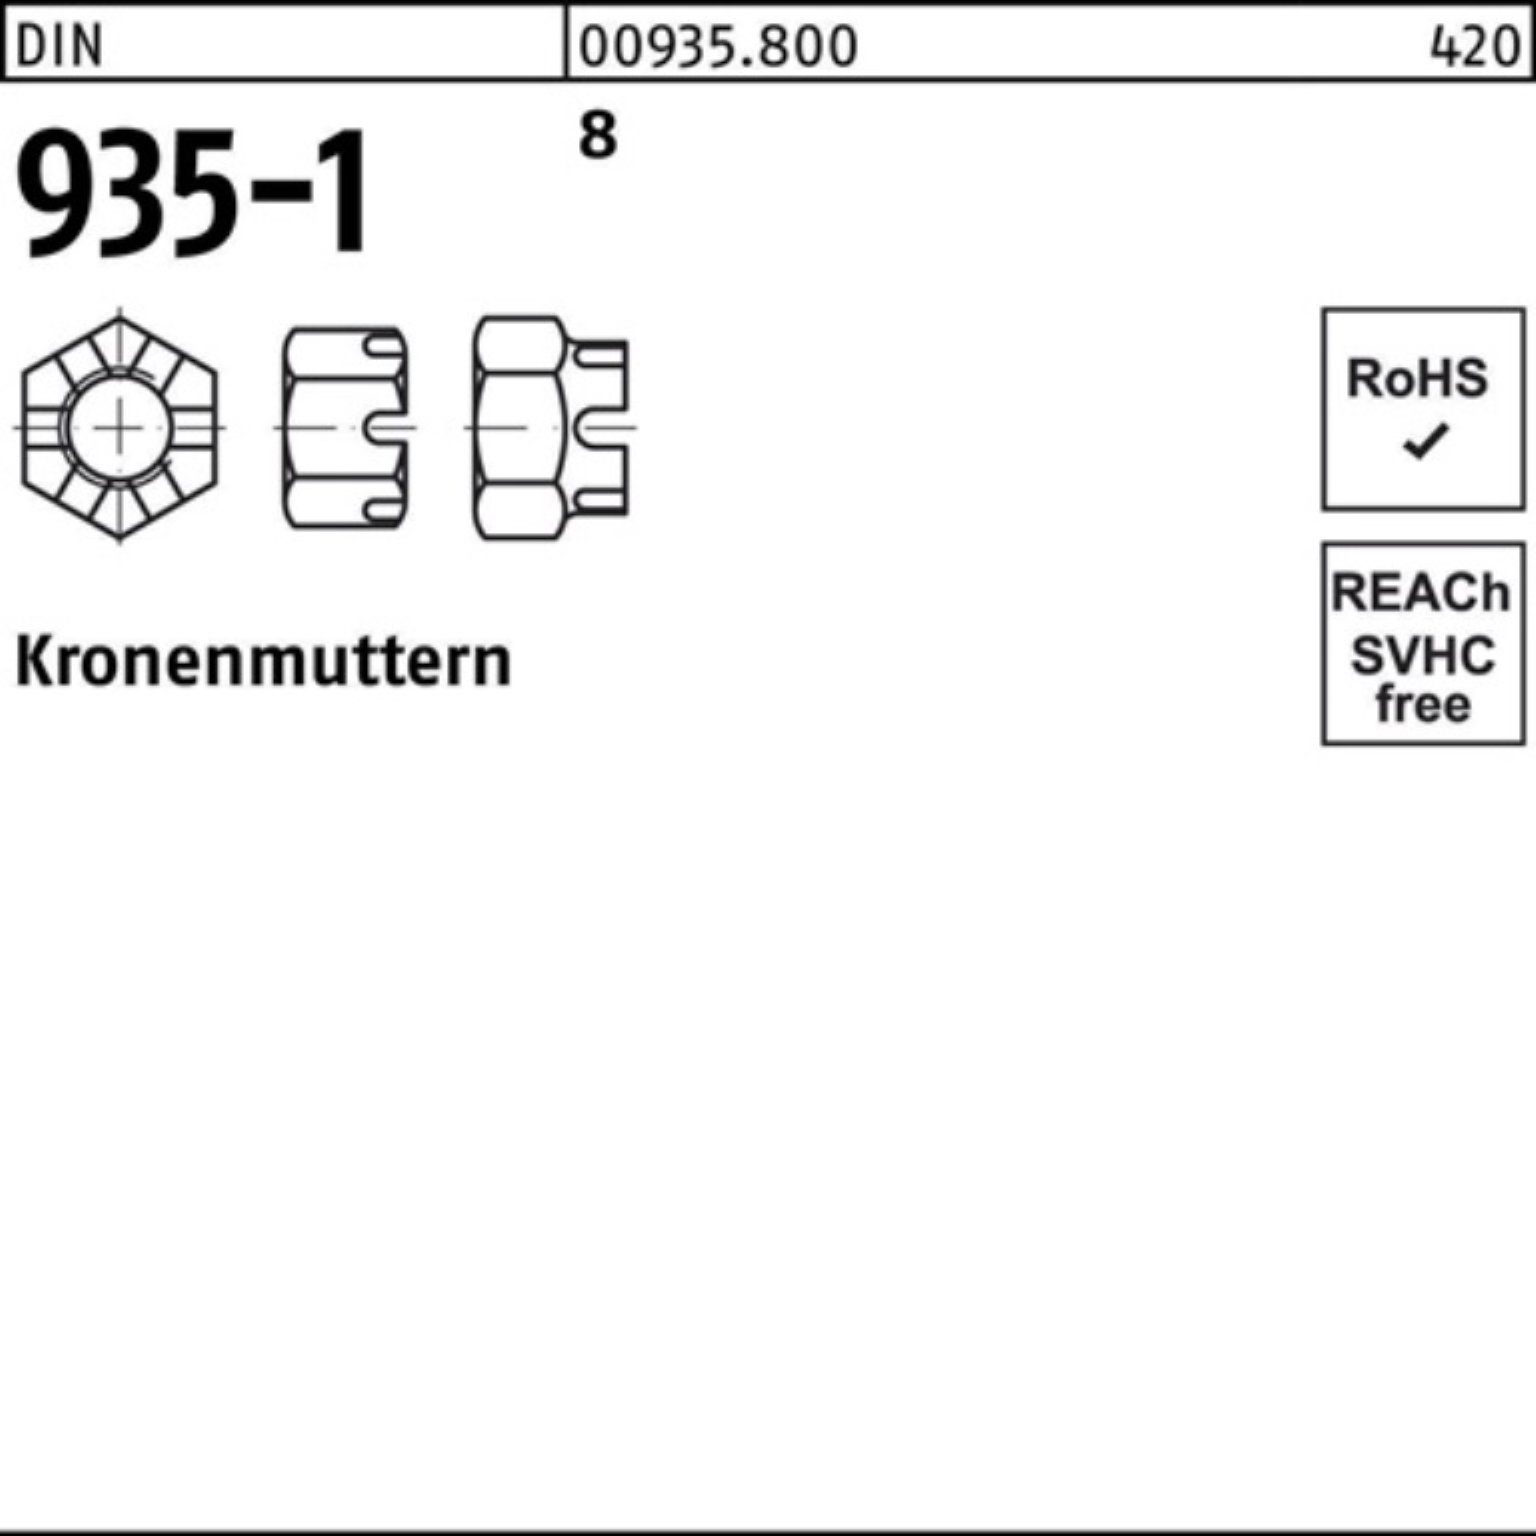 Reyher Kronenmutter 100er Pack Kronenmutter DIN 935-1 M30 8 10 Stück DIN 935-1 8 Kronenmu